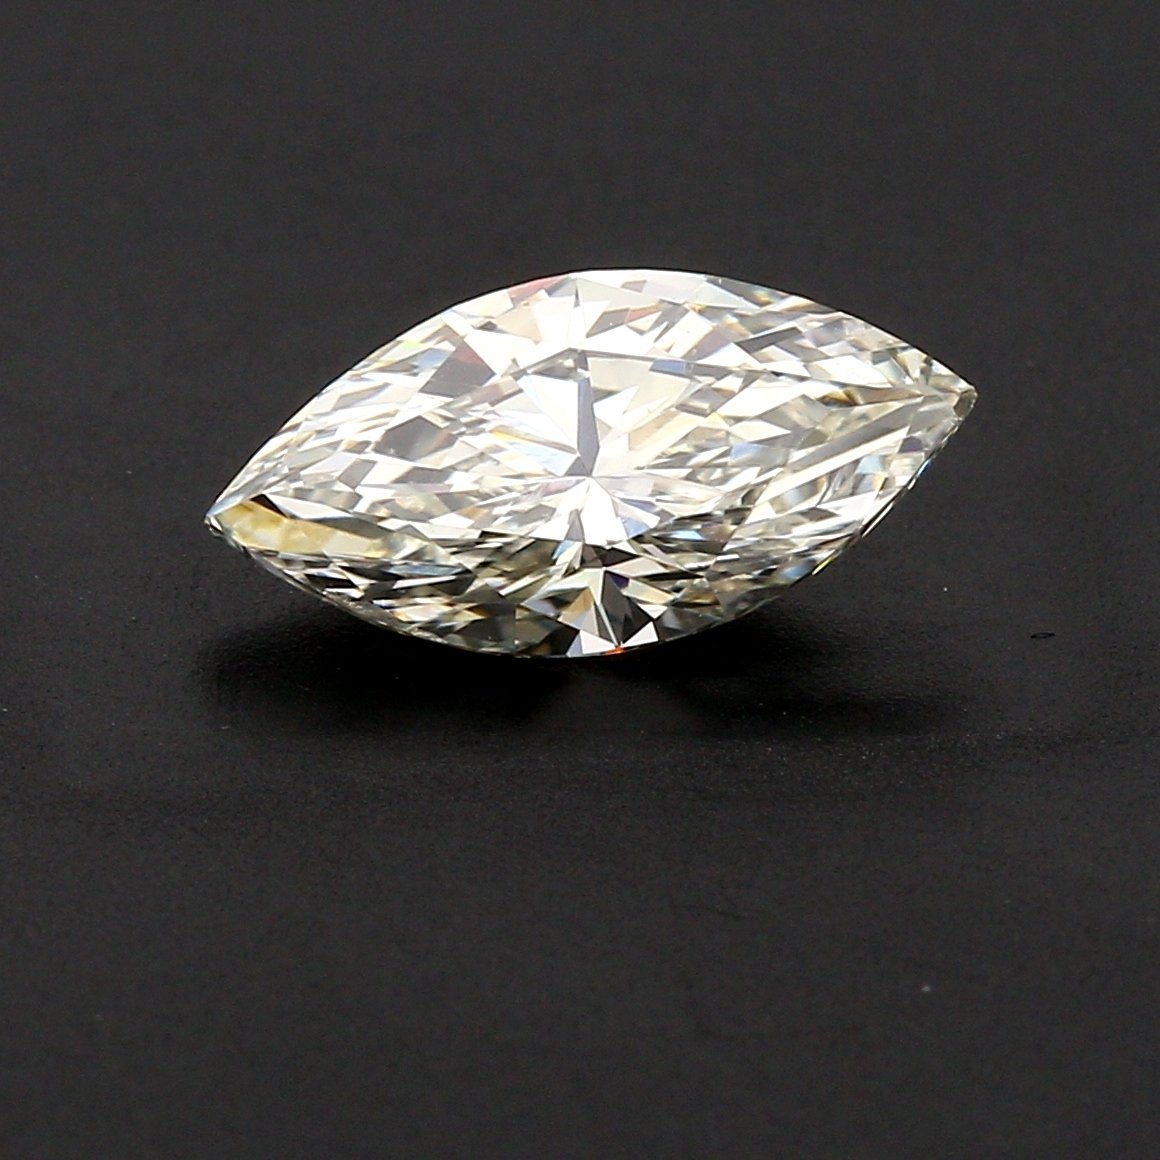 1.49ct Marquise Cut Diamond, VS2-J -GIA/COPY